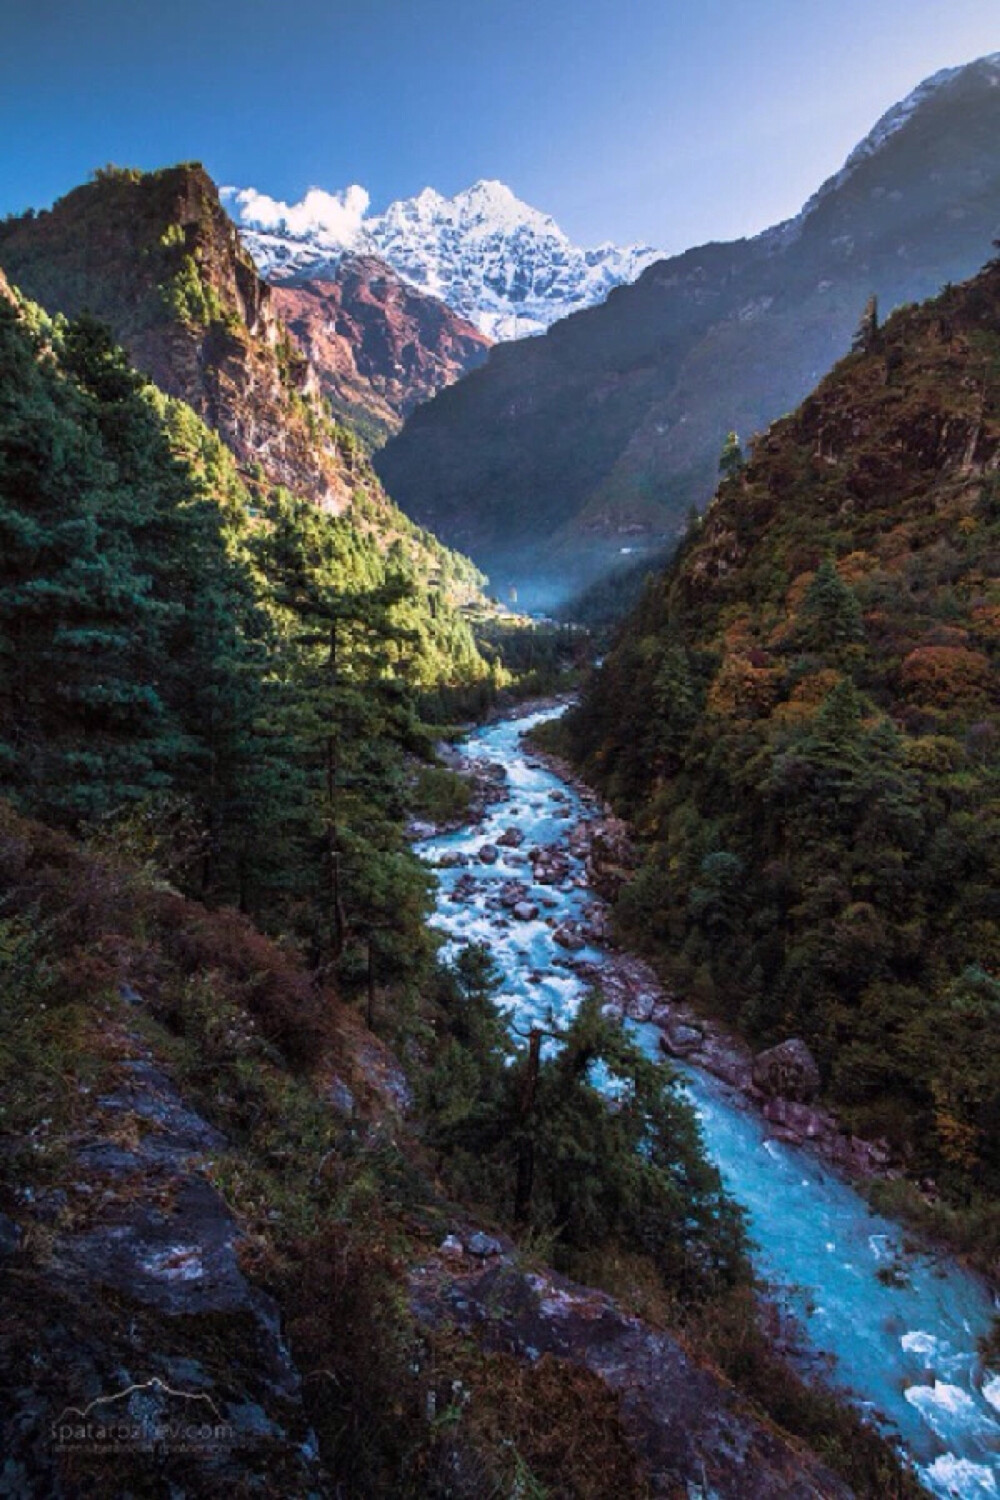 Dudh Koshi, Himalaya, Nepal。尼泊尔喜马拉雅山Dudh Kosi河(俗称牛奶河)。尼泊尔被誉为“徒步者的天堂”，有着世界上最多、最好、最美、最完善的徒步路线。观光线路基本上沿着夏尔巴人聚居的村落展开，主轴是由北向南横穿景区的Dudh Kosi河，这条河发源于几大高峰下的冰川，有4条主要支流，每条支流都是独立景区，从右向左依次是：洛子峰景区、珠峰景区、卓奥友峰景区、南纳帕拉景区。